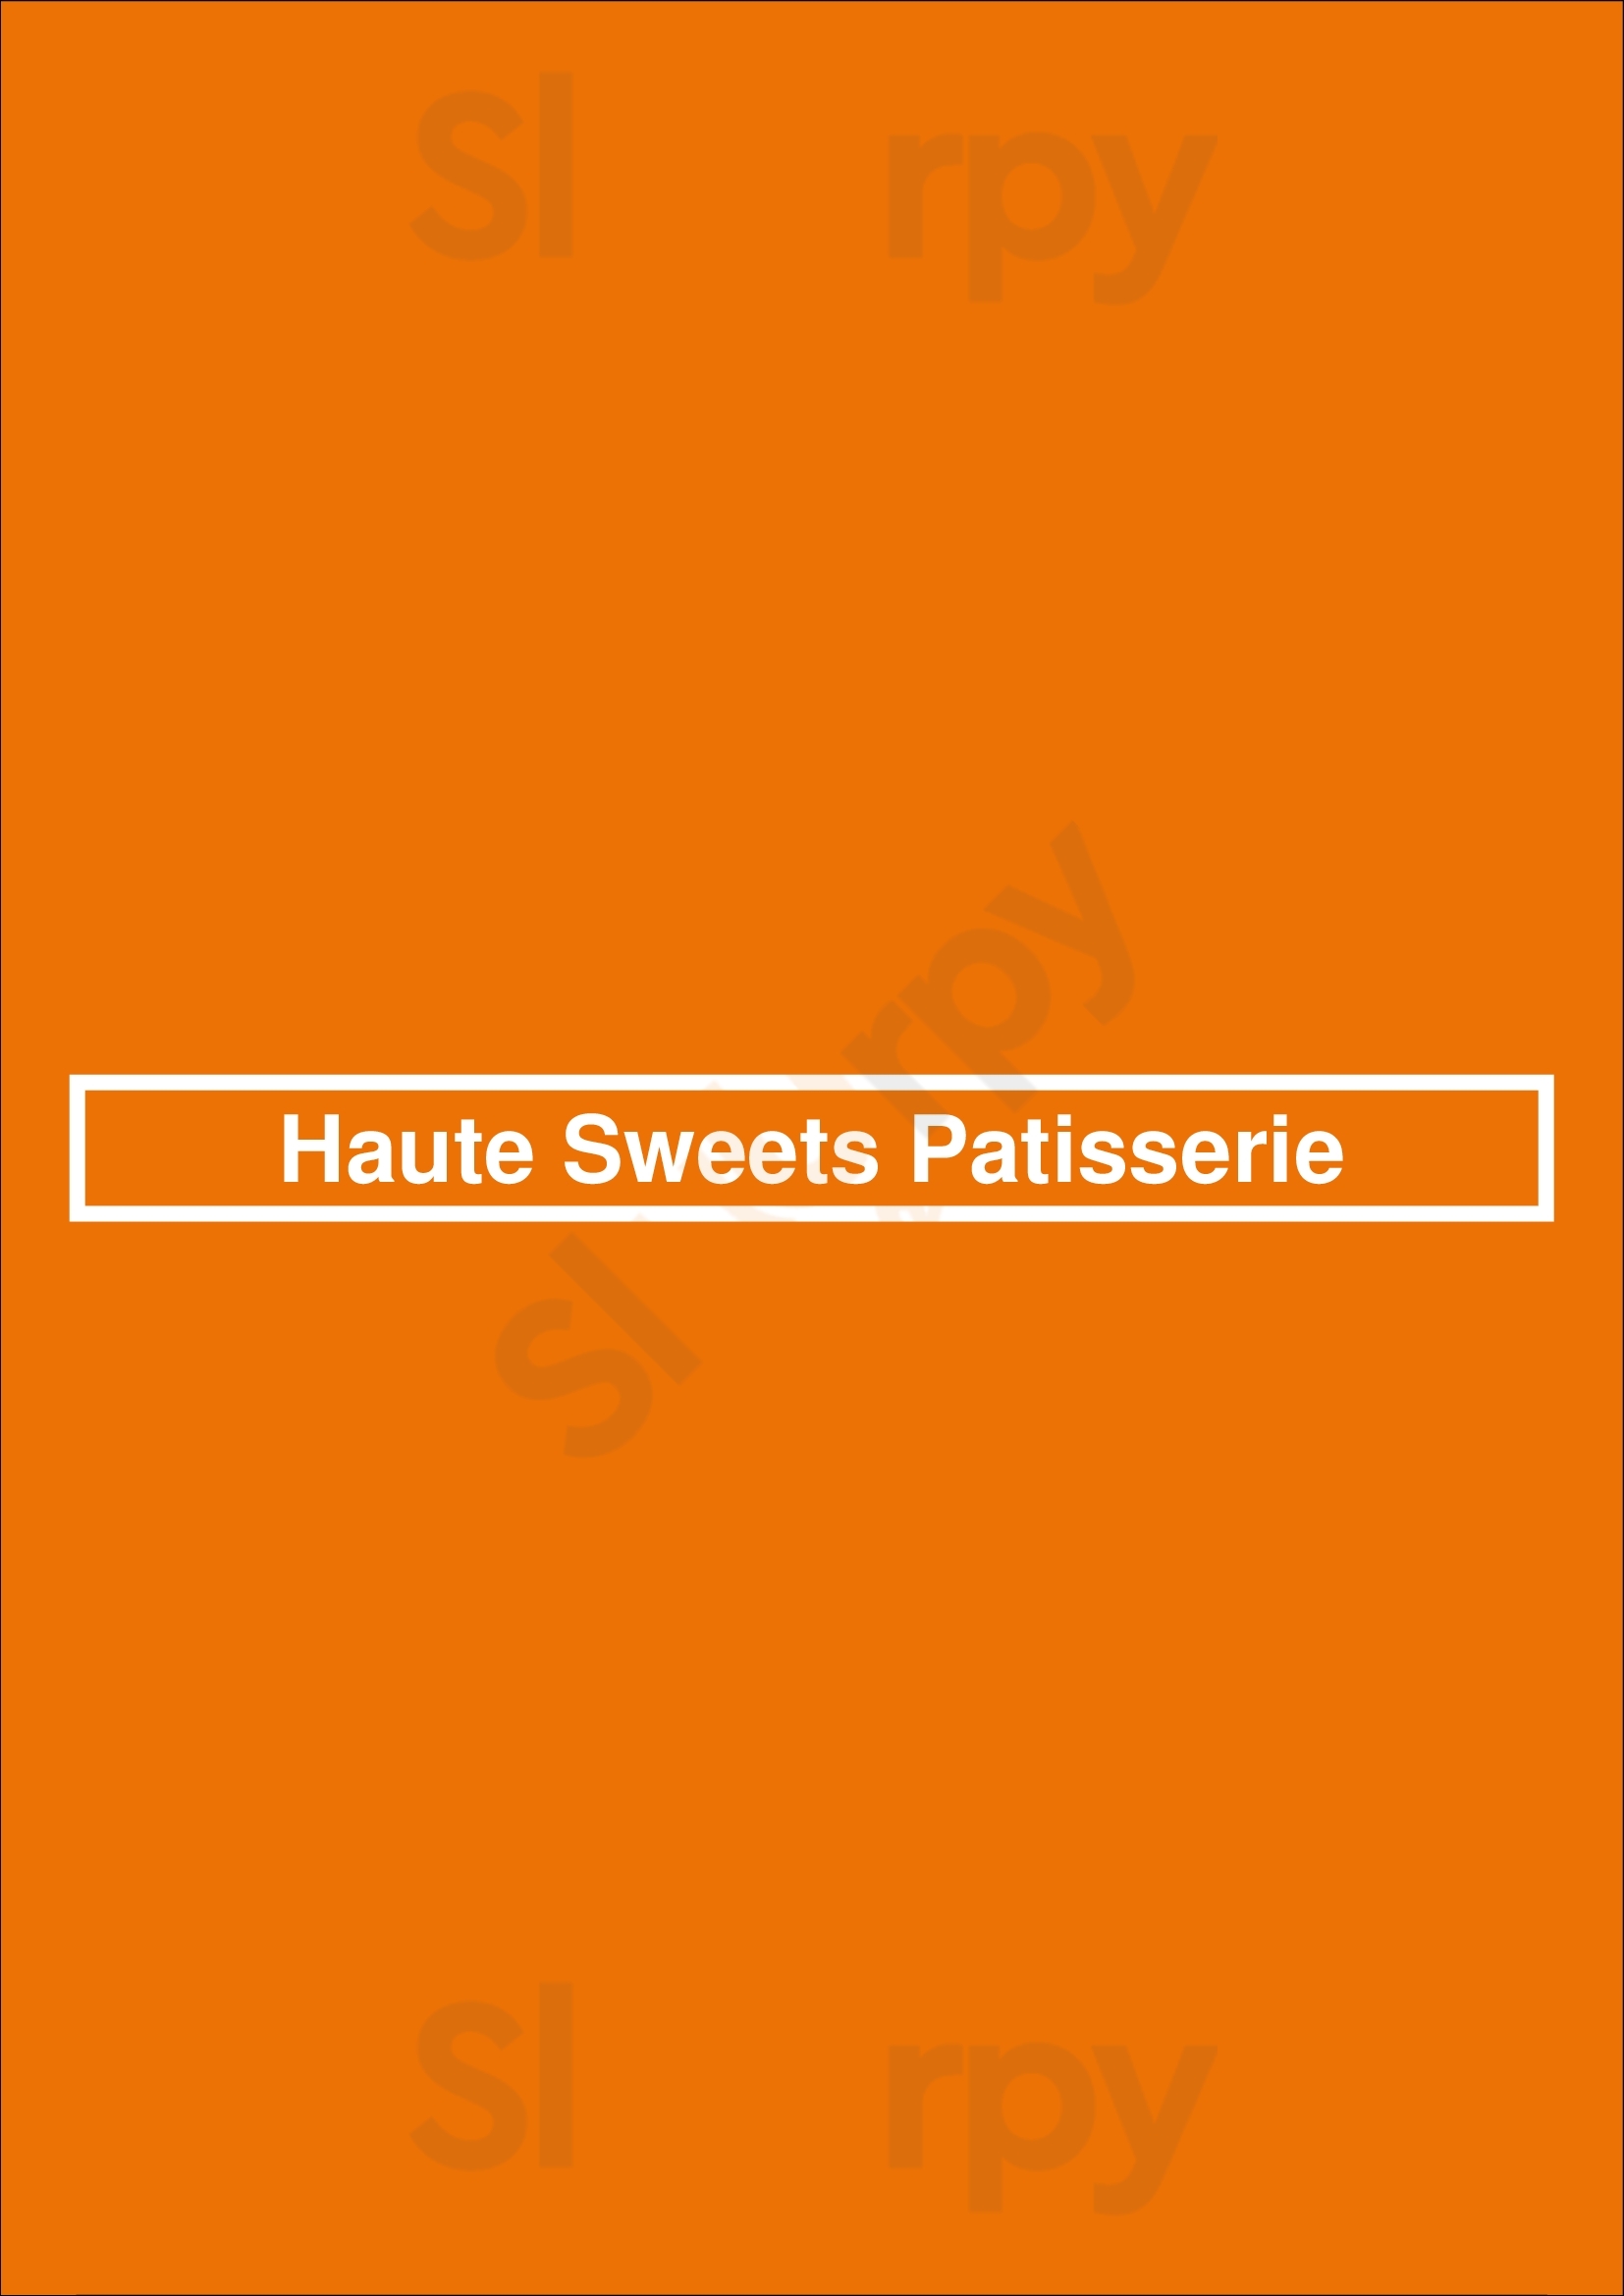 Haute Sweets Patisserie Dallas Menu - 1